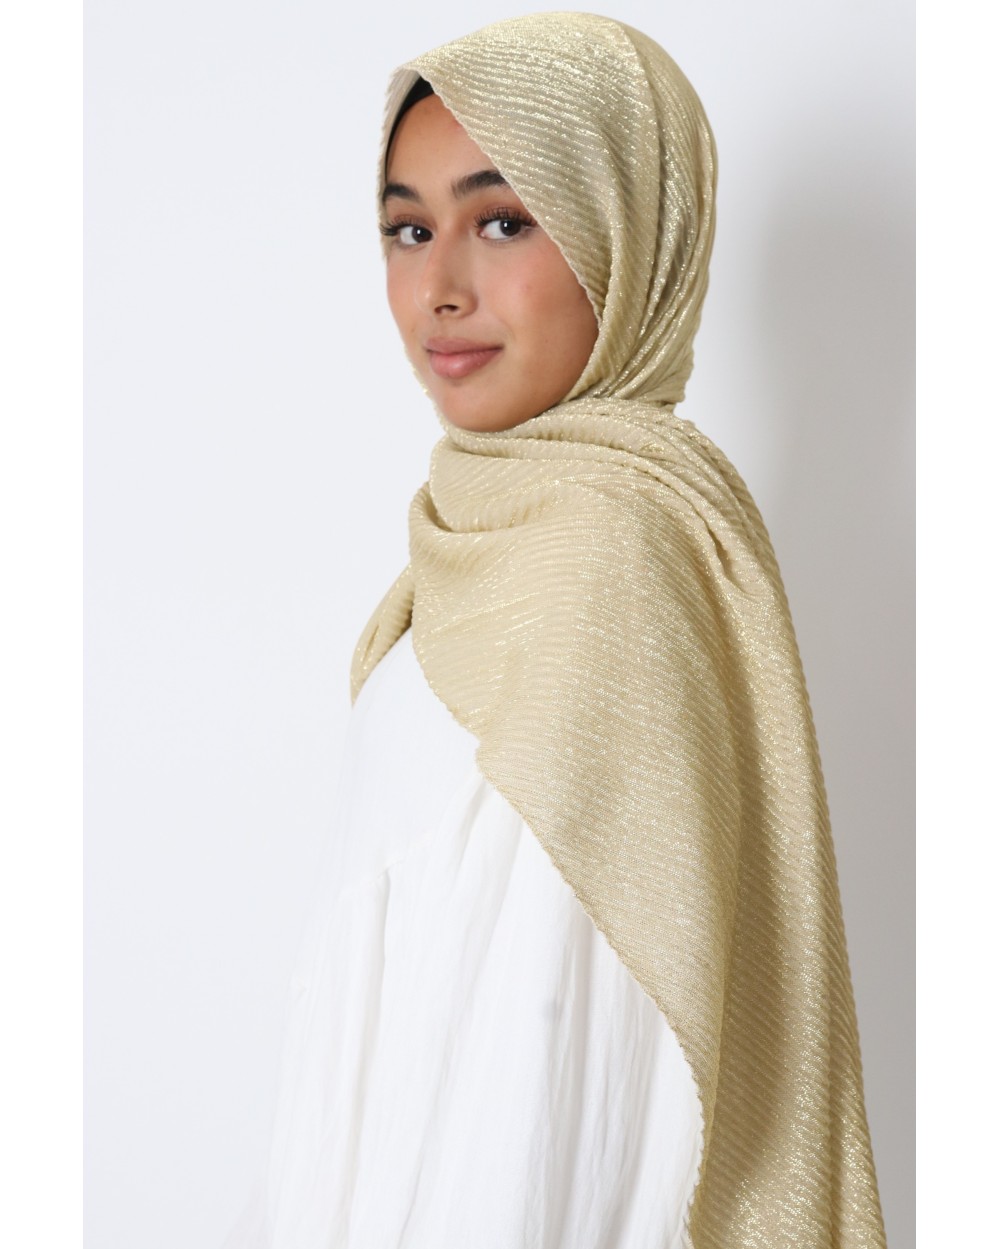 Maxi pleated and metallic hijab